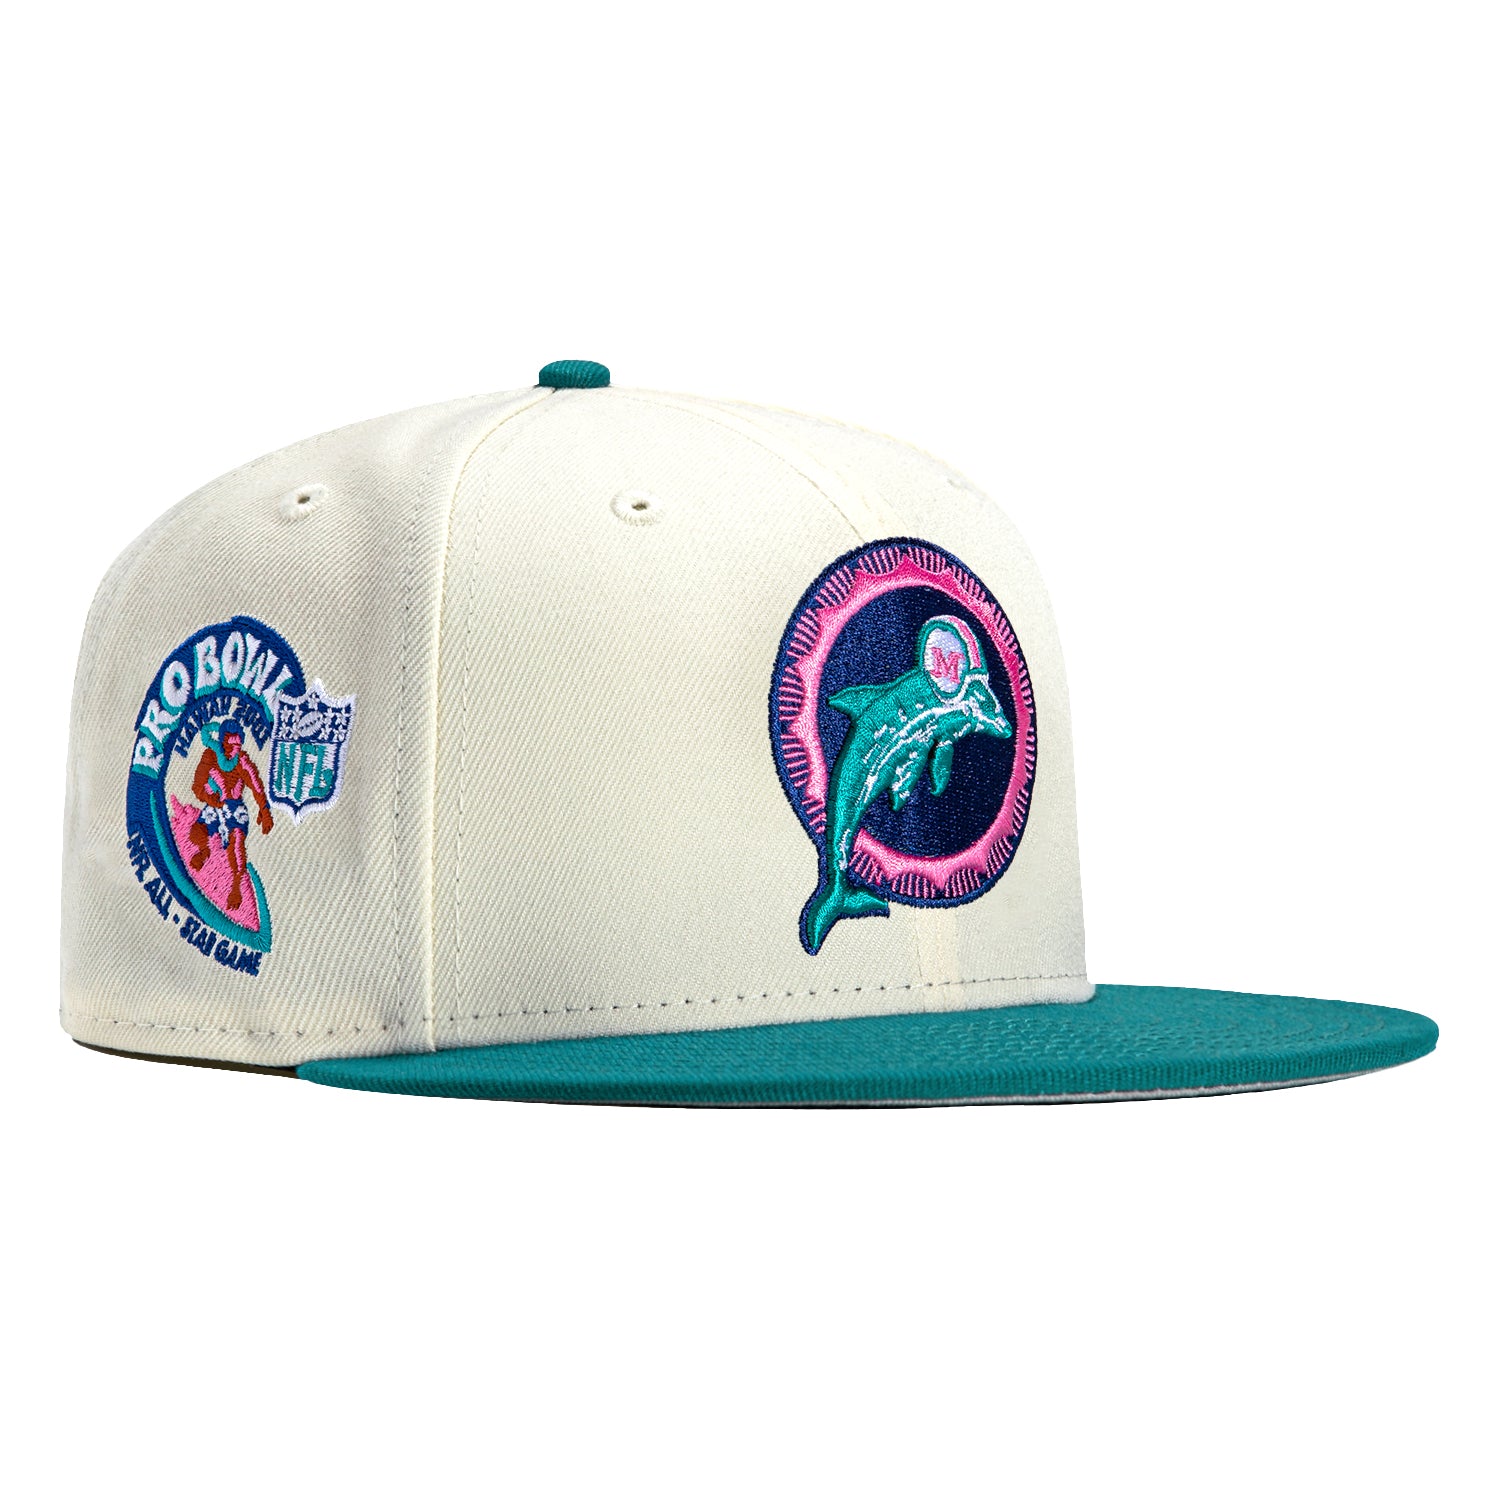 miami dolphins sideline hat